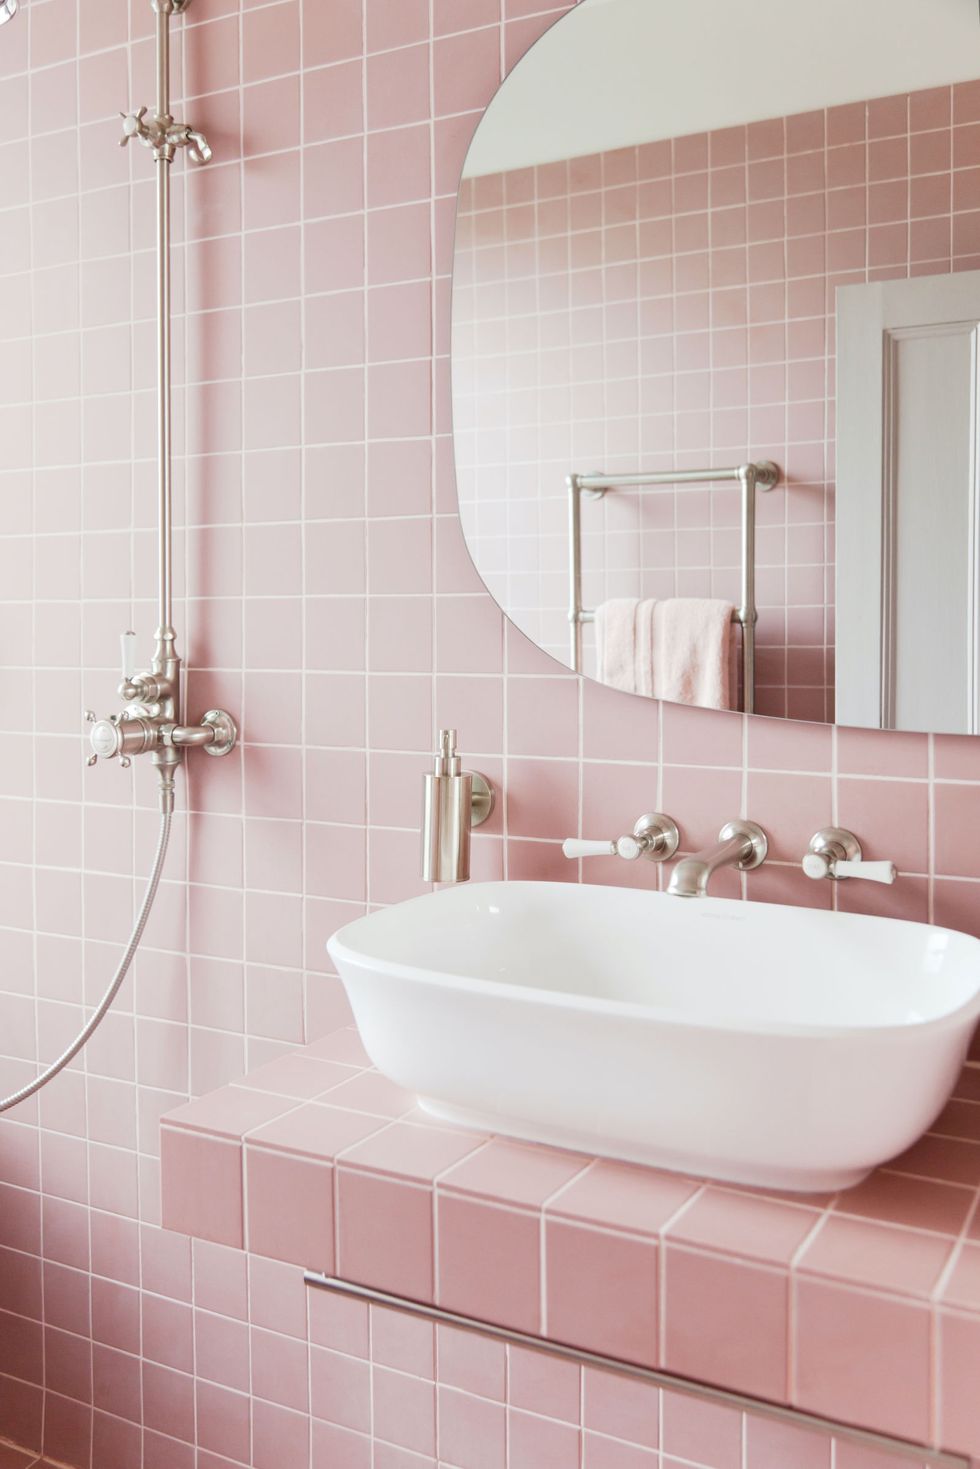 Tour 2LG's Pink Bathroom - Pink Bathroom Tiles